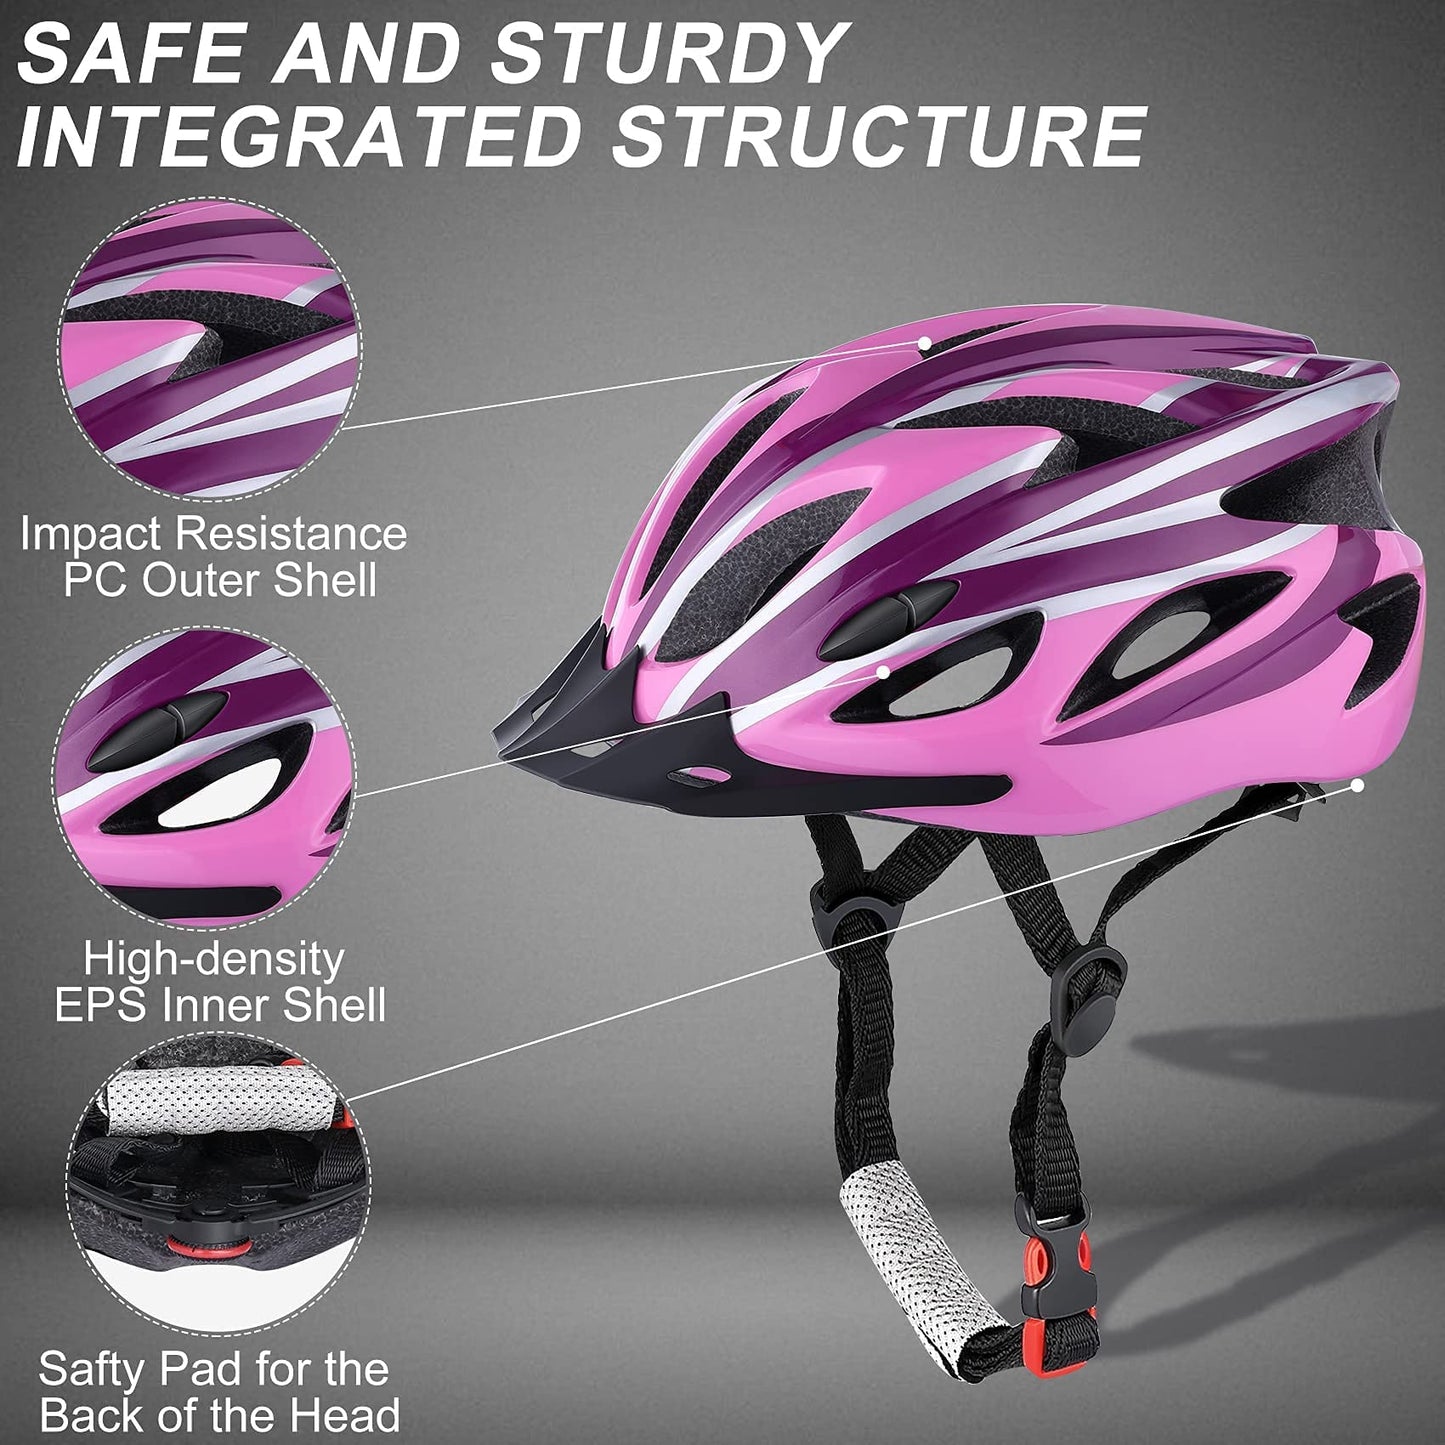 Zacro Adult Bike Helmet Lightweight - Bike Helmet for Men Women Comfort with Pads&Visor, Certified Bicycle Helmet for Adults Youth Mountain Road Biker (Pink Plus Purple, Universal Adult(54-62 cm))